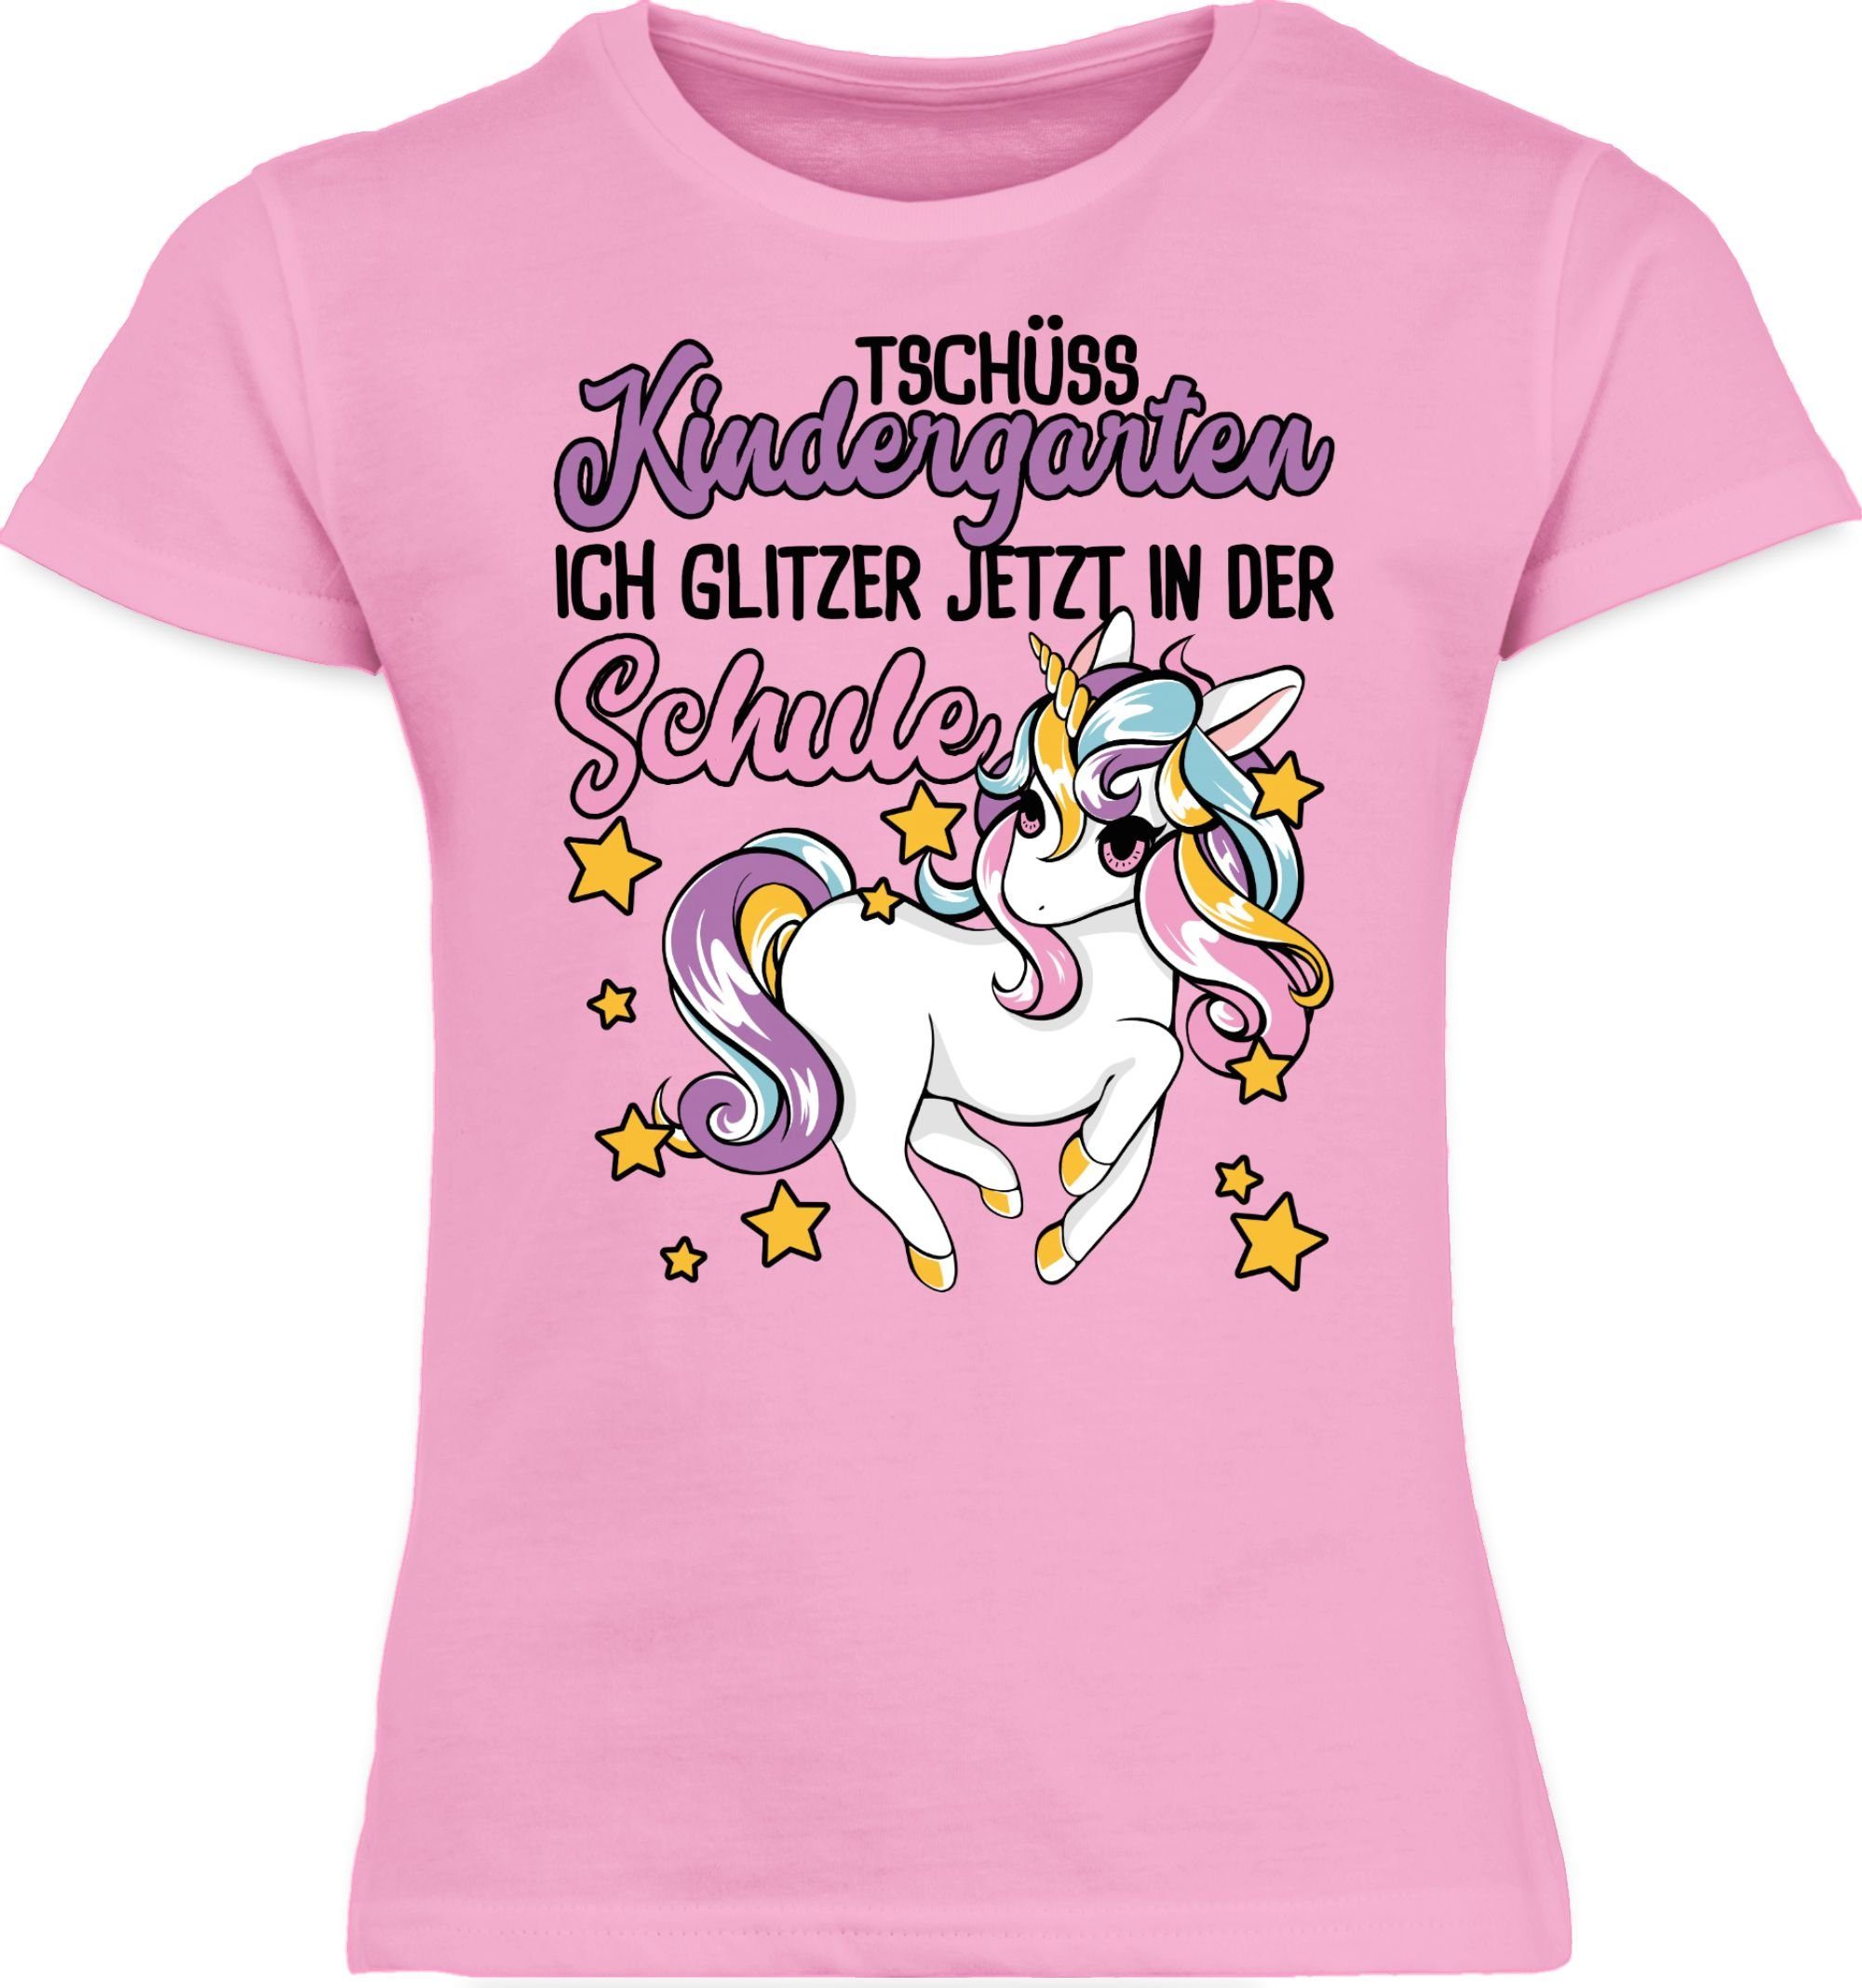 Shirtracer T-Shirt Tschüss Kindergarten Einhorn - Glitzer jetzt in der Schule Einschulung Mädchen 2 Rosa